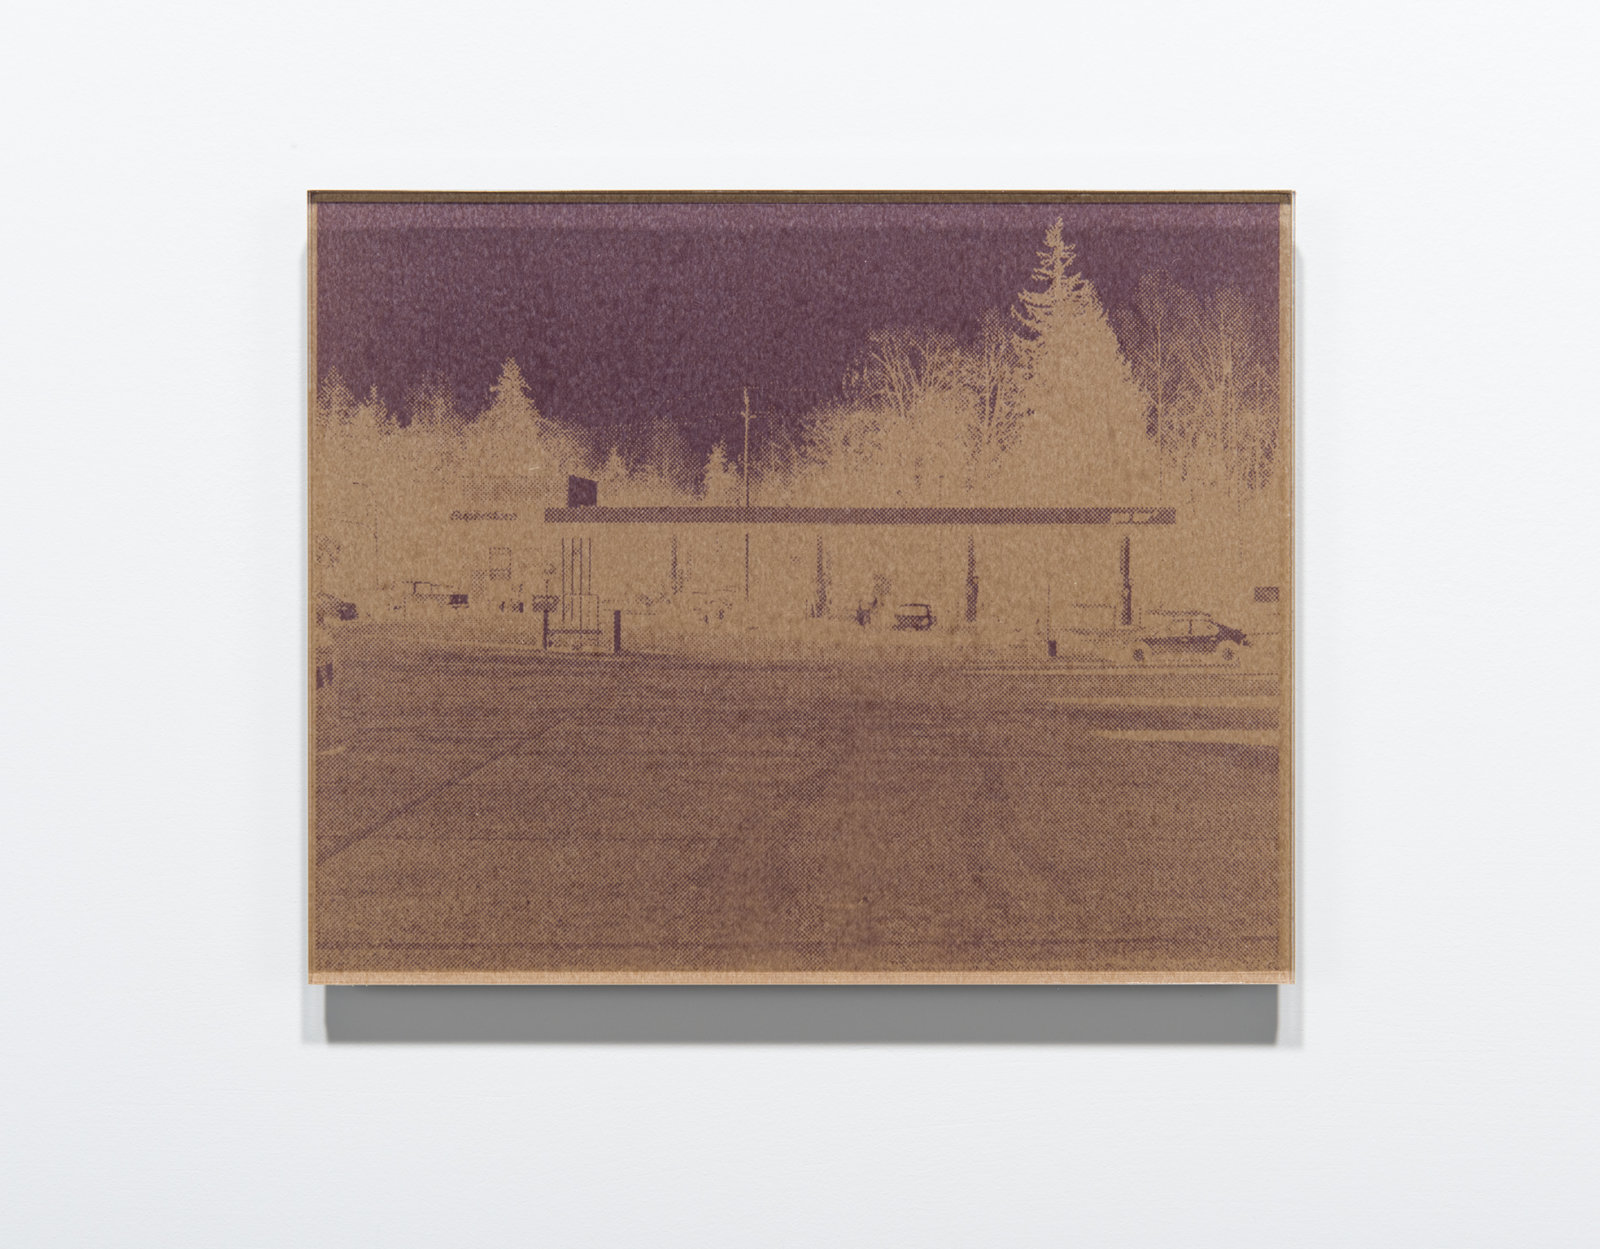 Raymond Boisjoly, 333 Seymour Blvd. North Vancouver, BC, 2012, sunlight, construction paper, acrylic glass, blackened negative, 8 x 10 in. (20 x 25 cm)